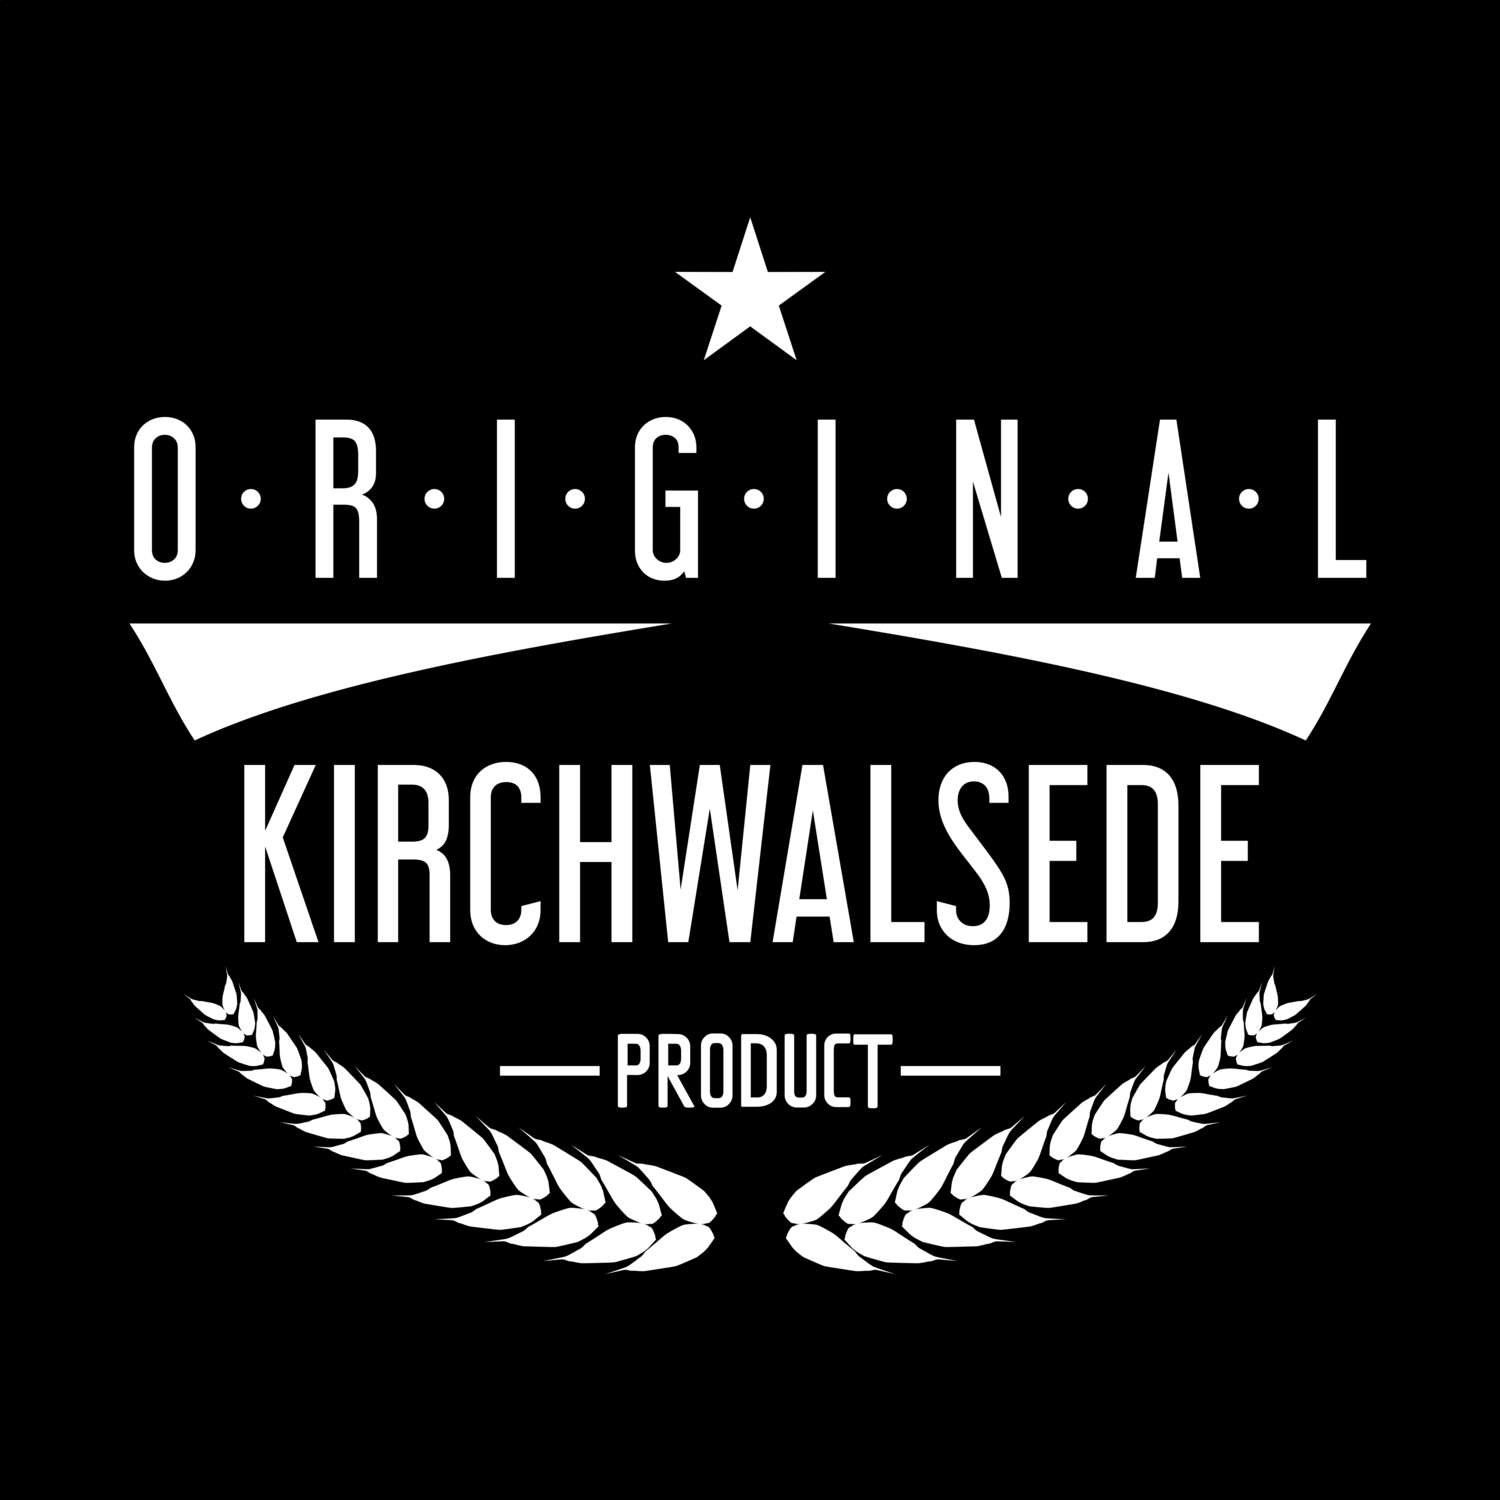 Kirchwalsede T-Shirt »Original Product«